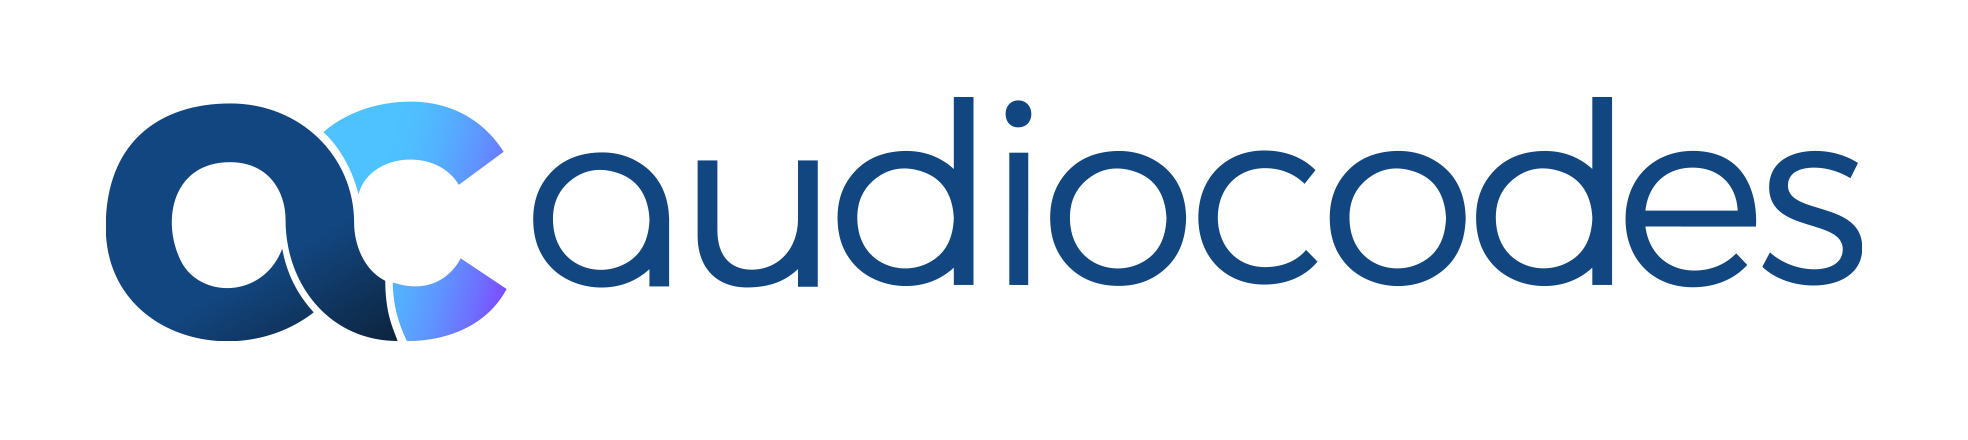 audiocodes-logo-transparent_1_